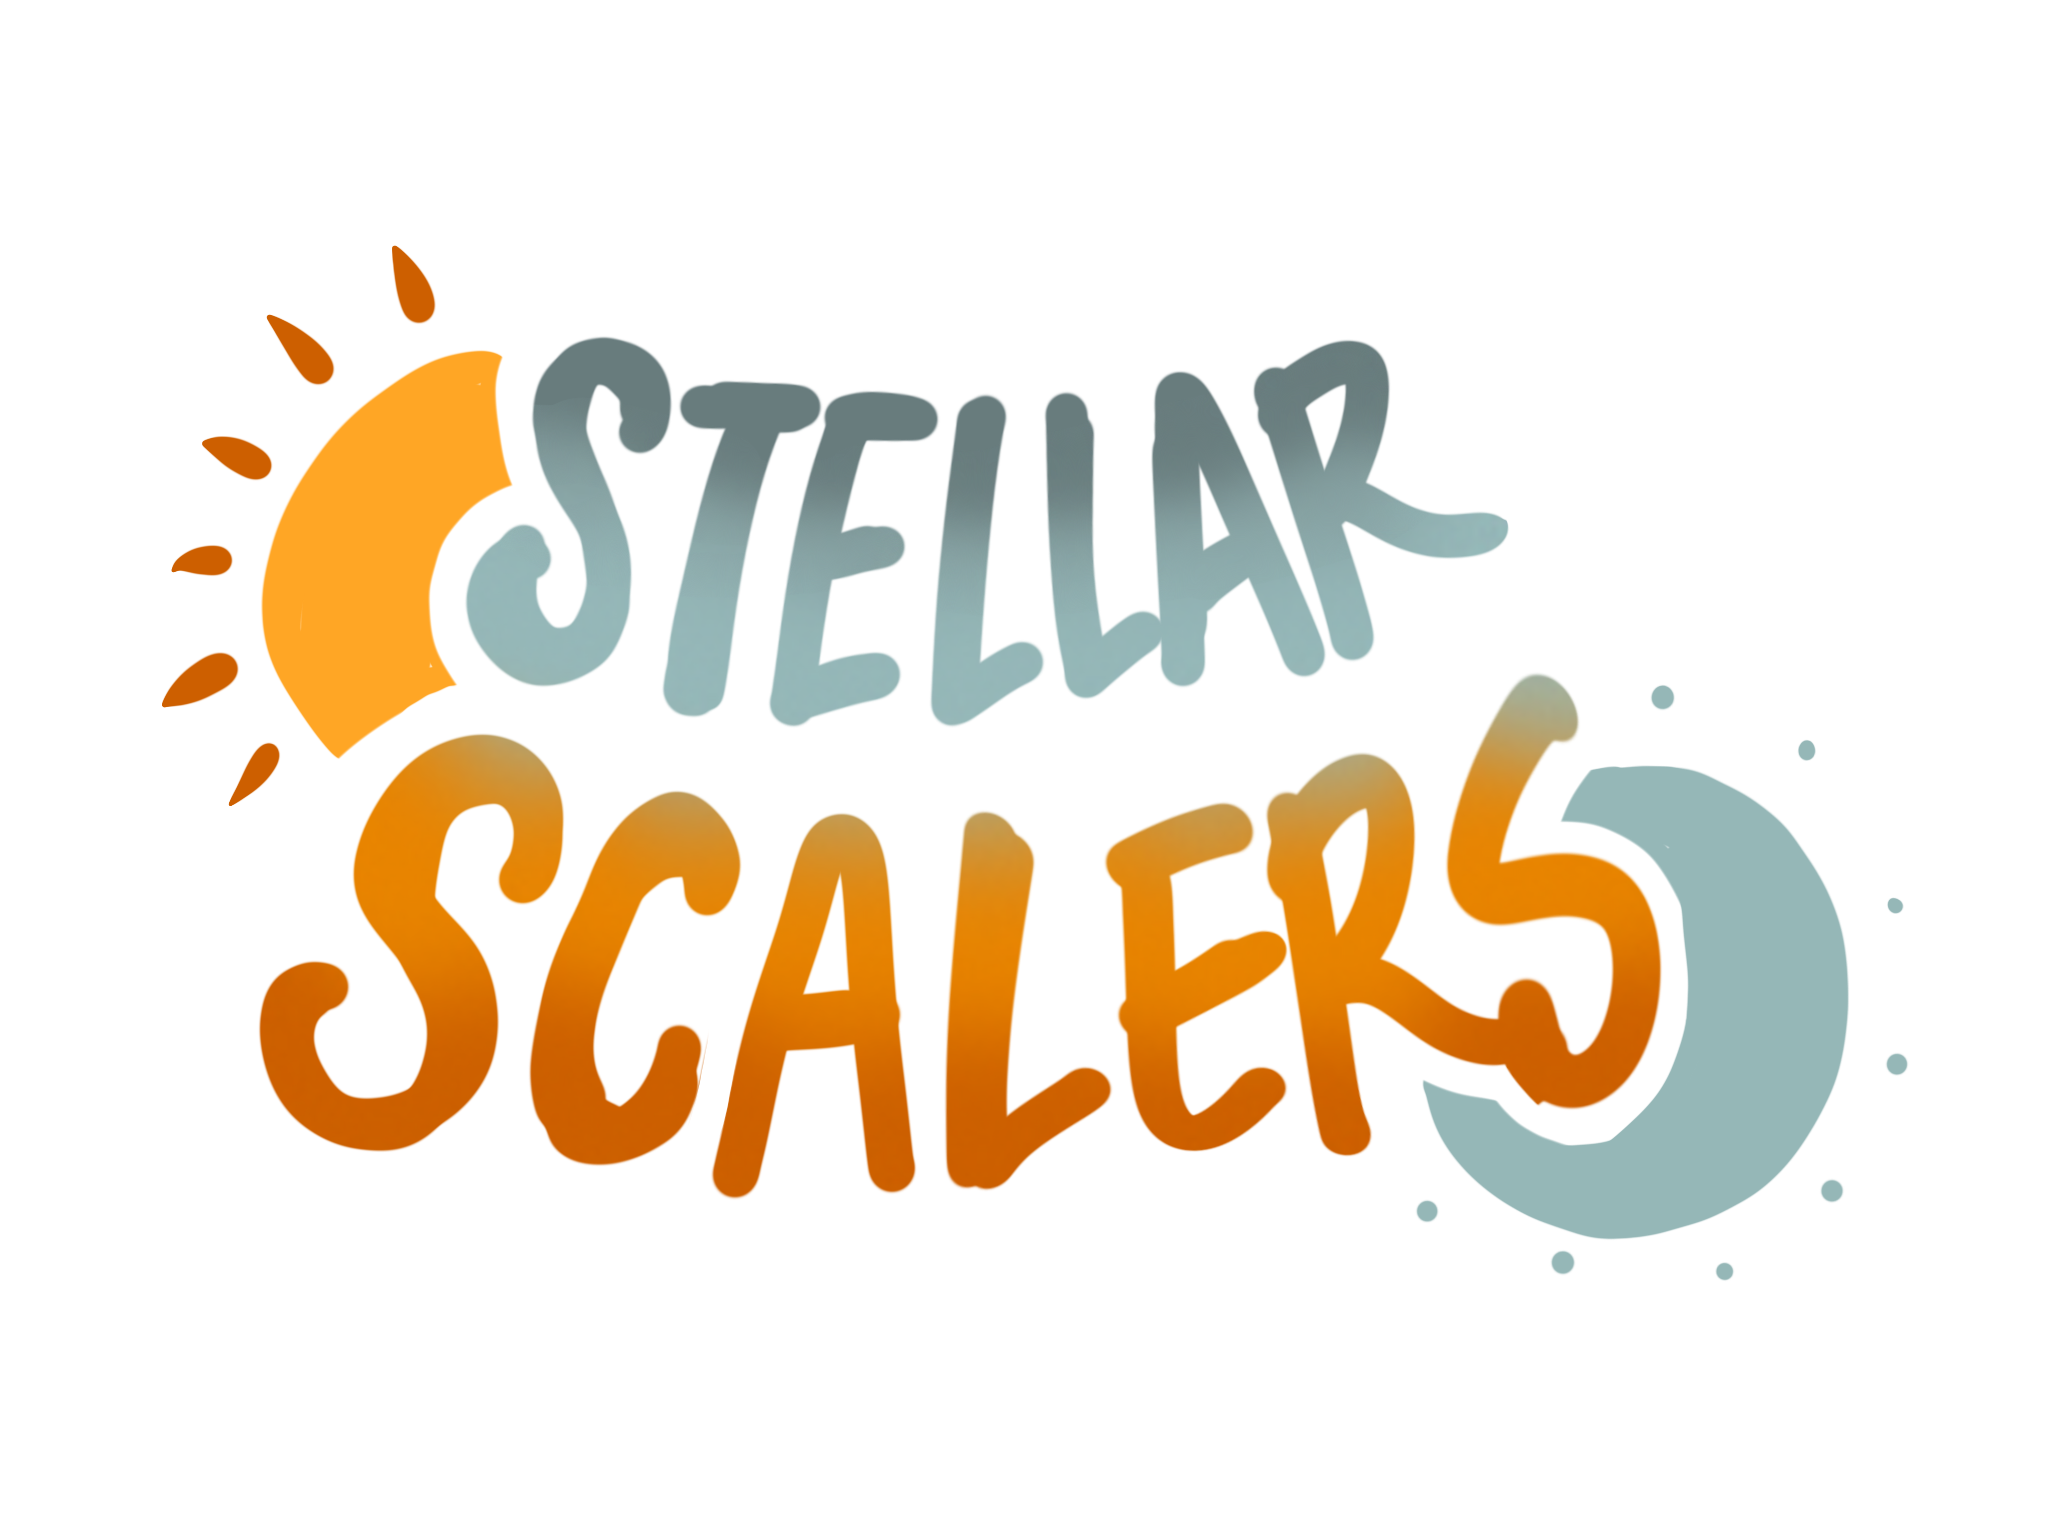 Stellar Scalers